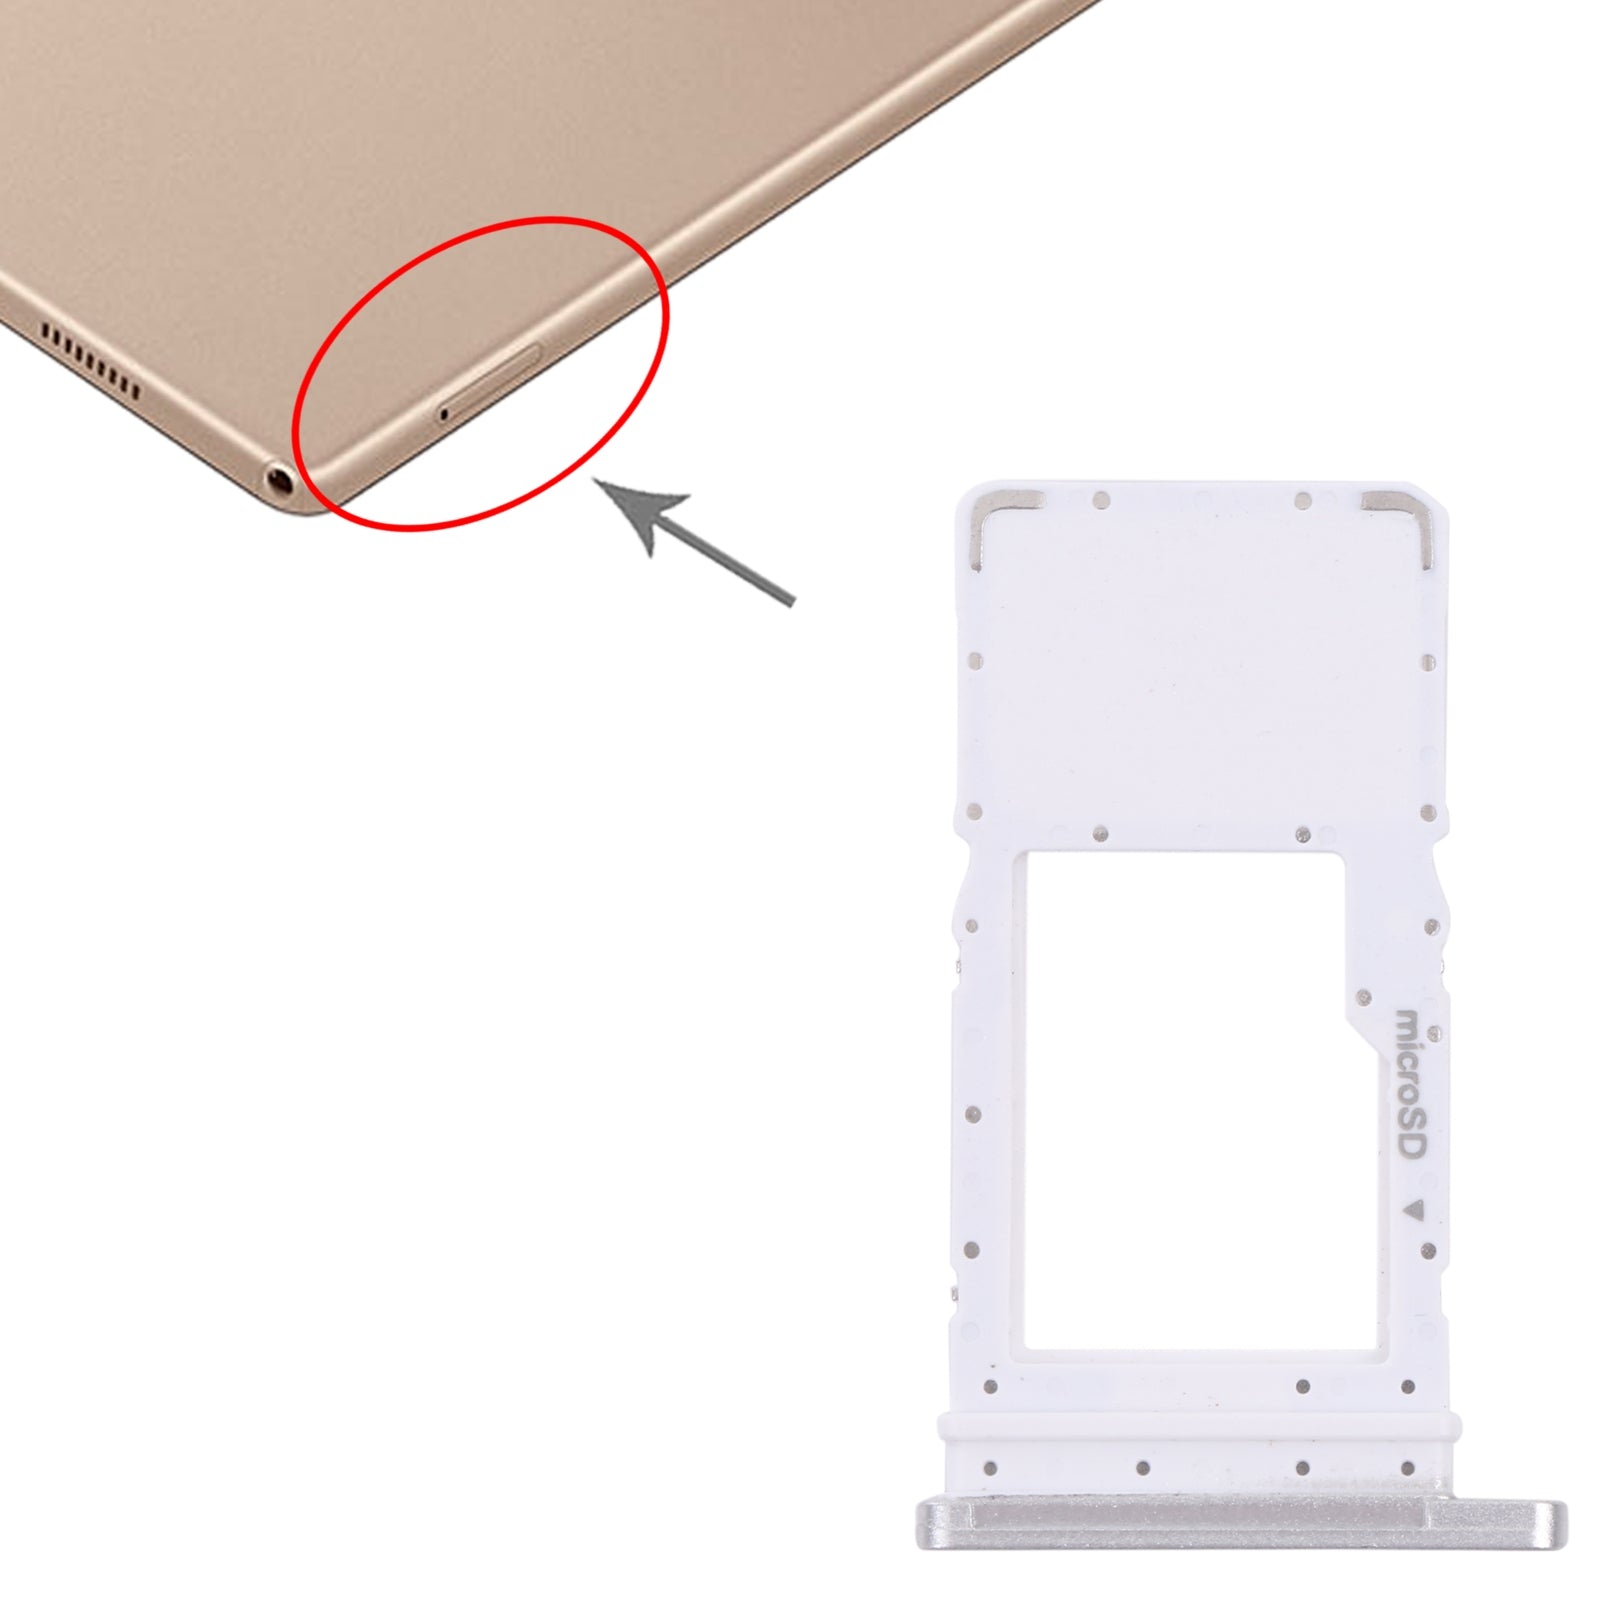 Micro SD Tray Holder Samsung Galaxy Tab A7 10.4 2020 T505 White